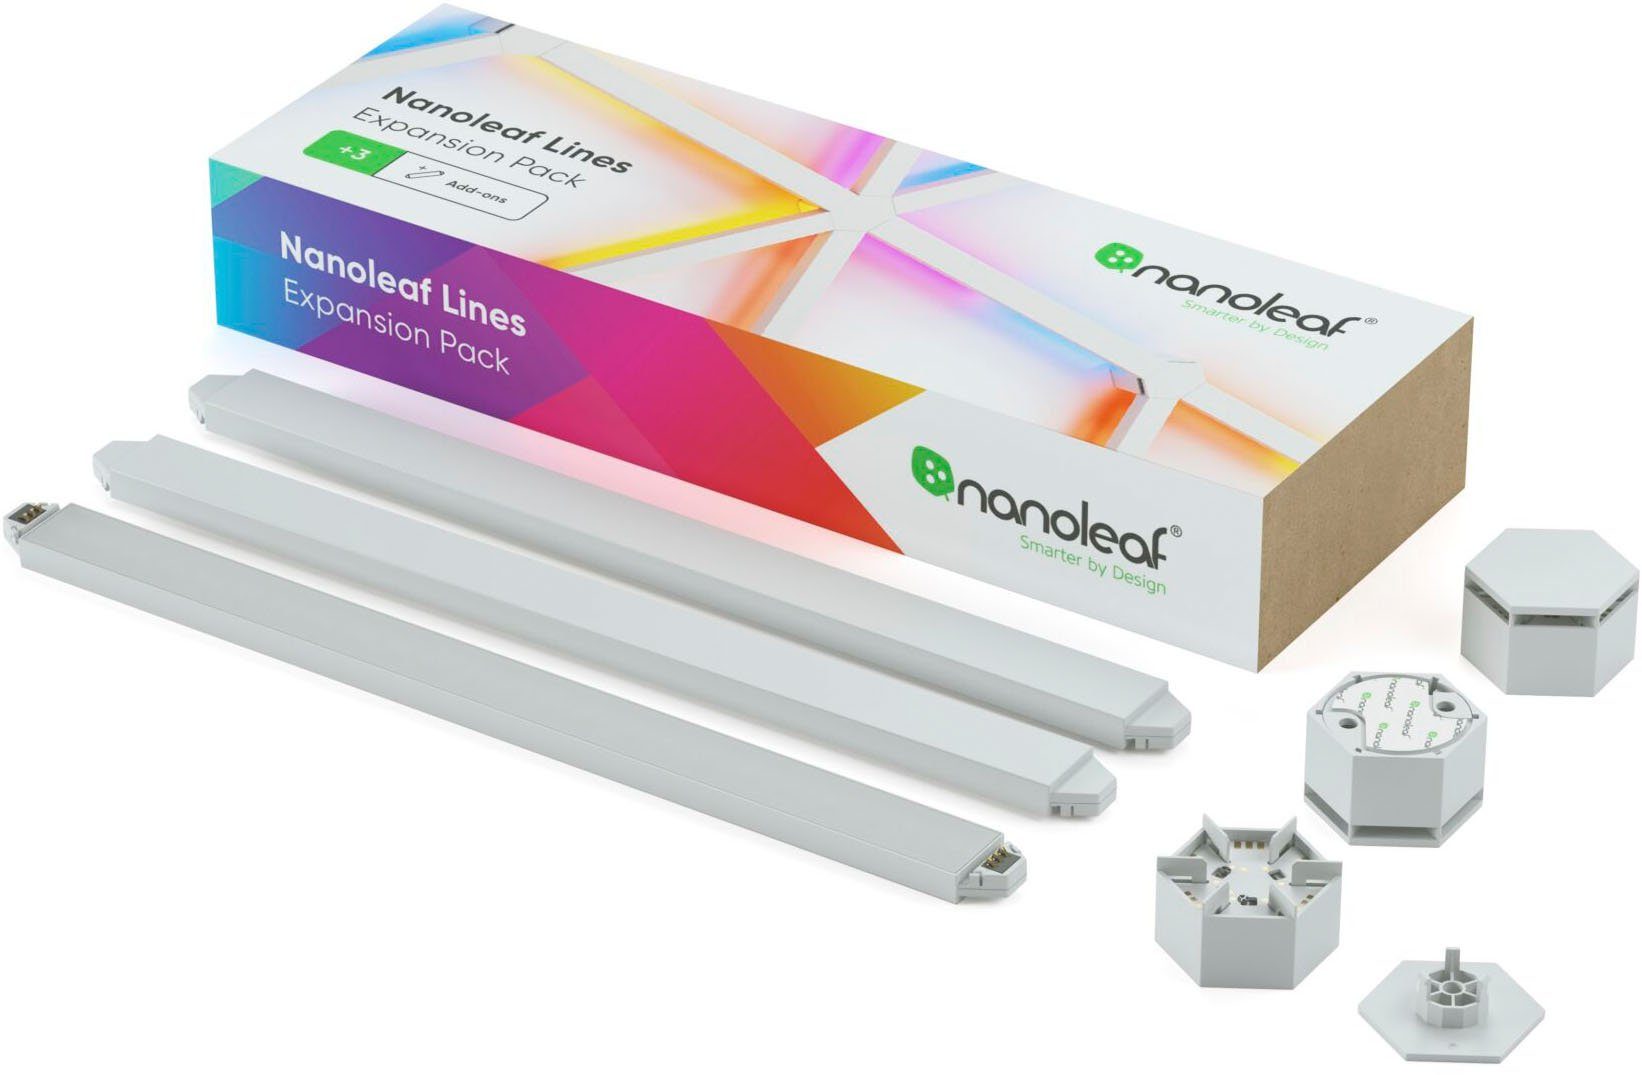 und Beleuchtung Smarte Farbwechsler, fest integriert, LED elegante Dimmfunktion, Lines, Technologie nanoleaf Lichtleiste LED